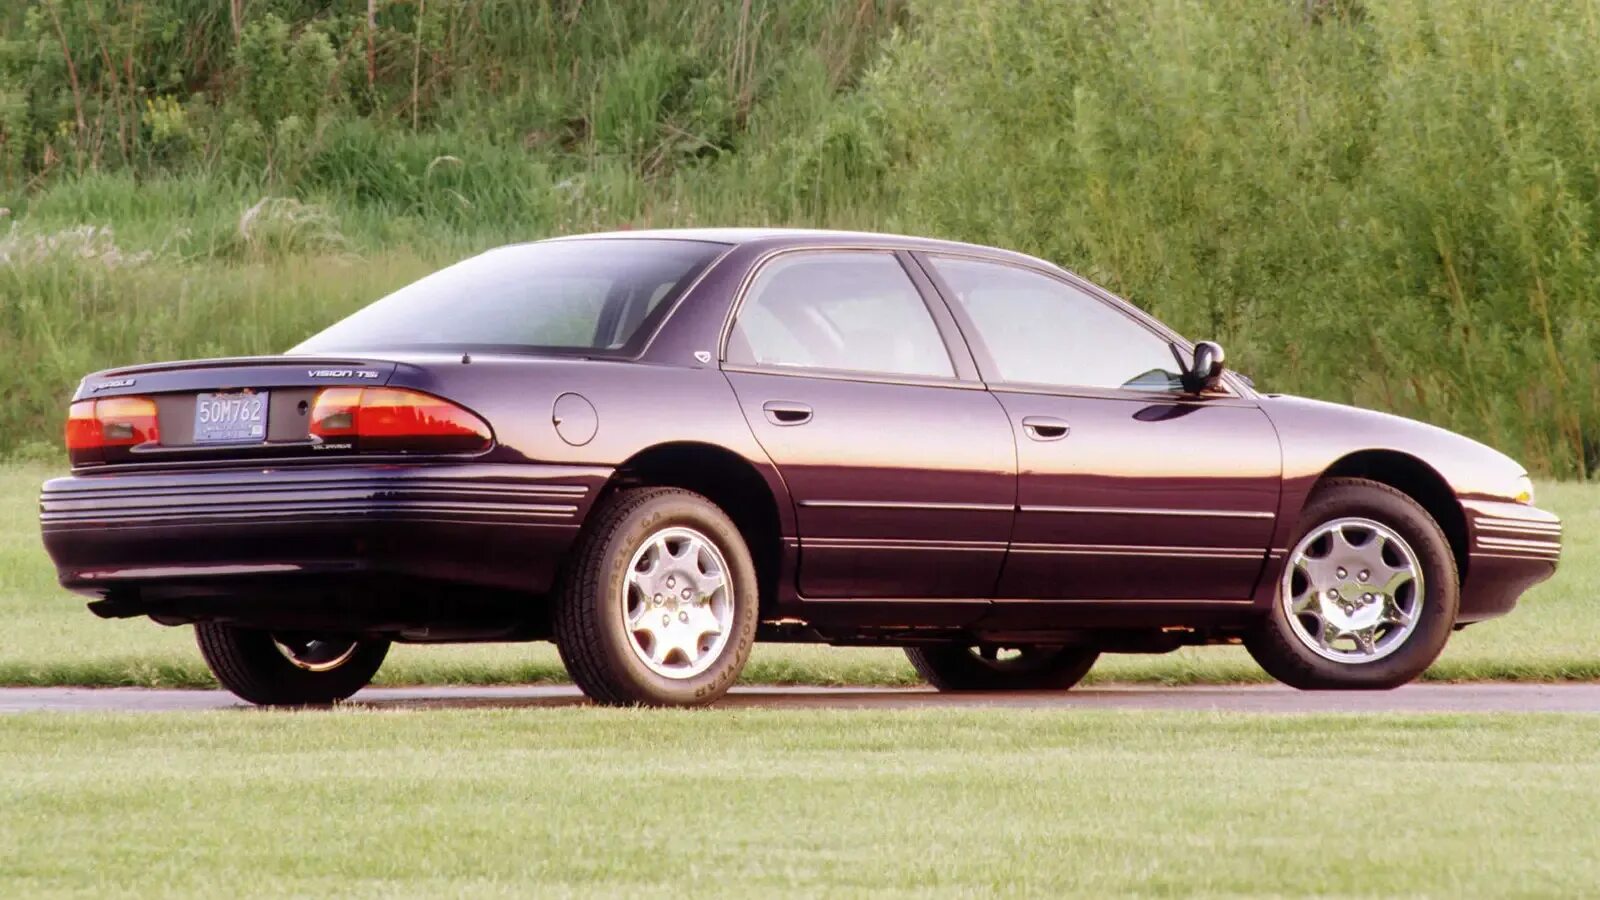 Крайслер игл Вижн. Eagle Vision 1993. Chrysler Eagle Talon 1993. Крайслер ВИЗИОН 1995.